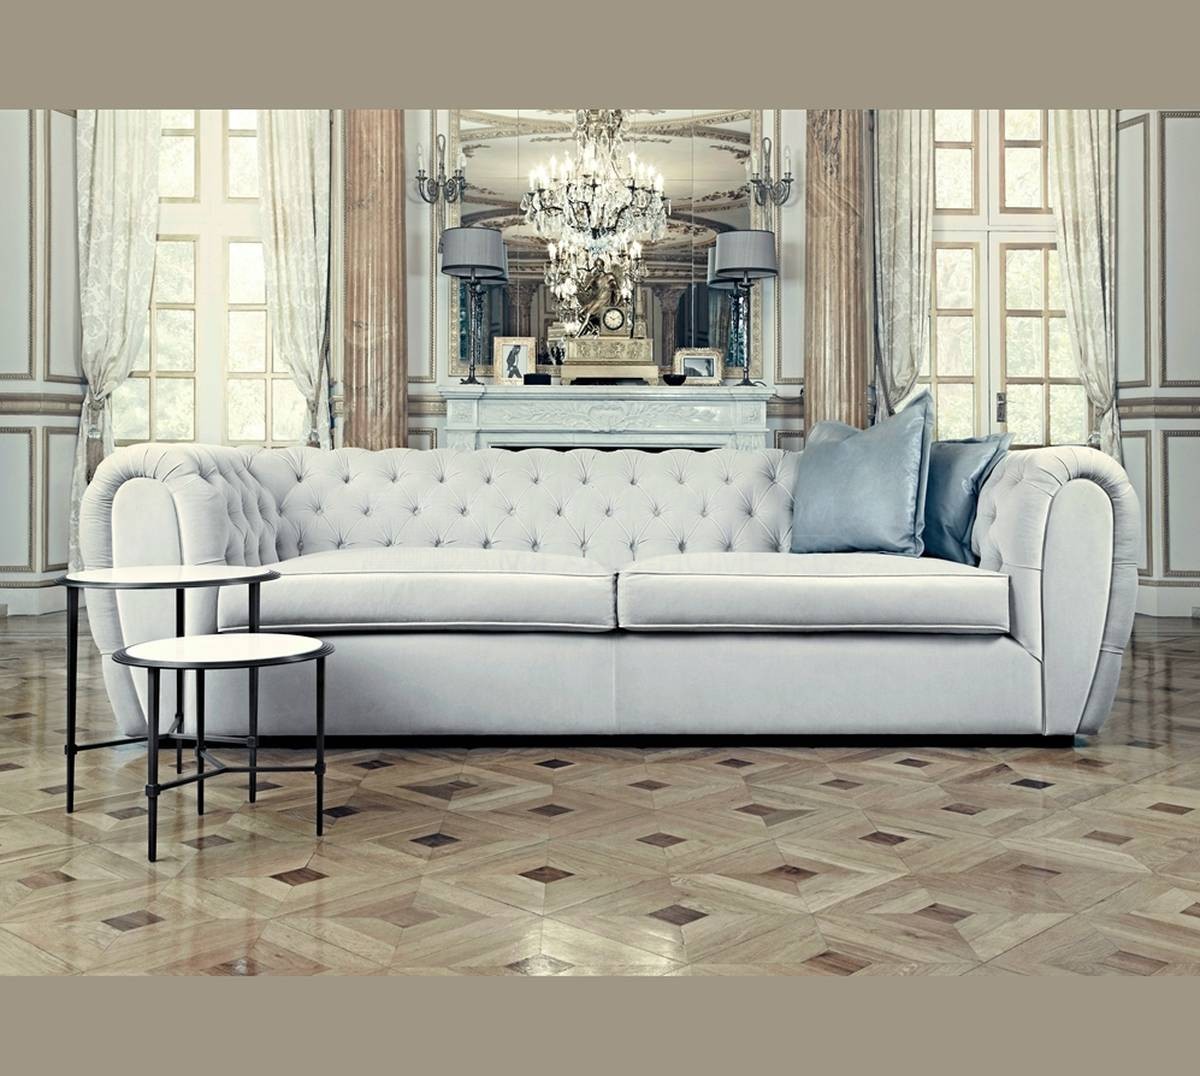 Прямой диван Windsor sofa из Великобритании фабрики THE SOFA & CHAIR Company